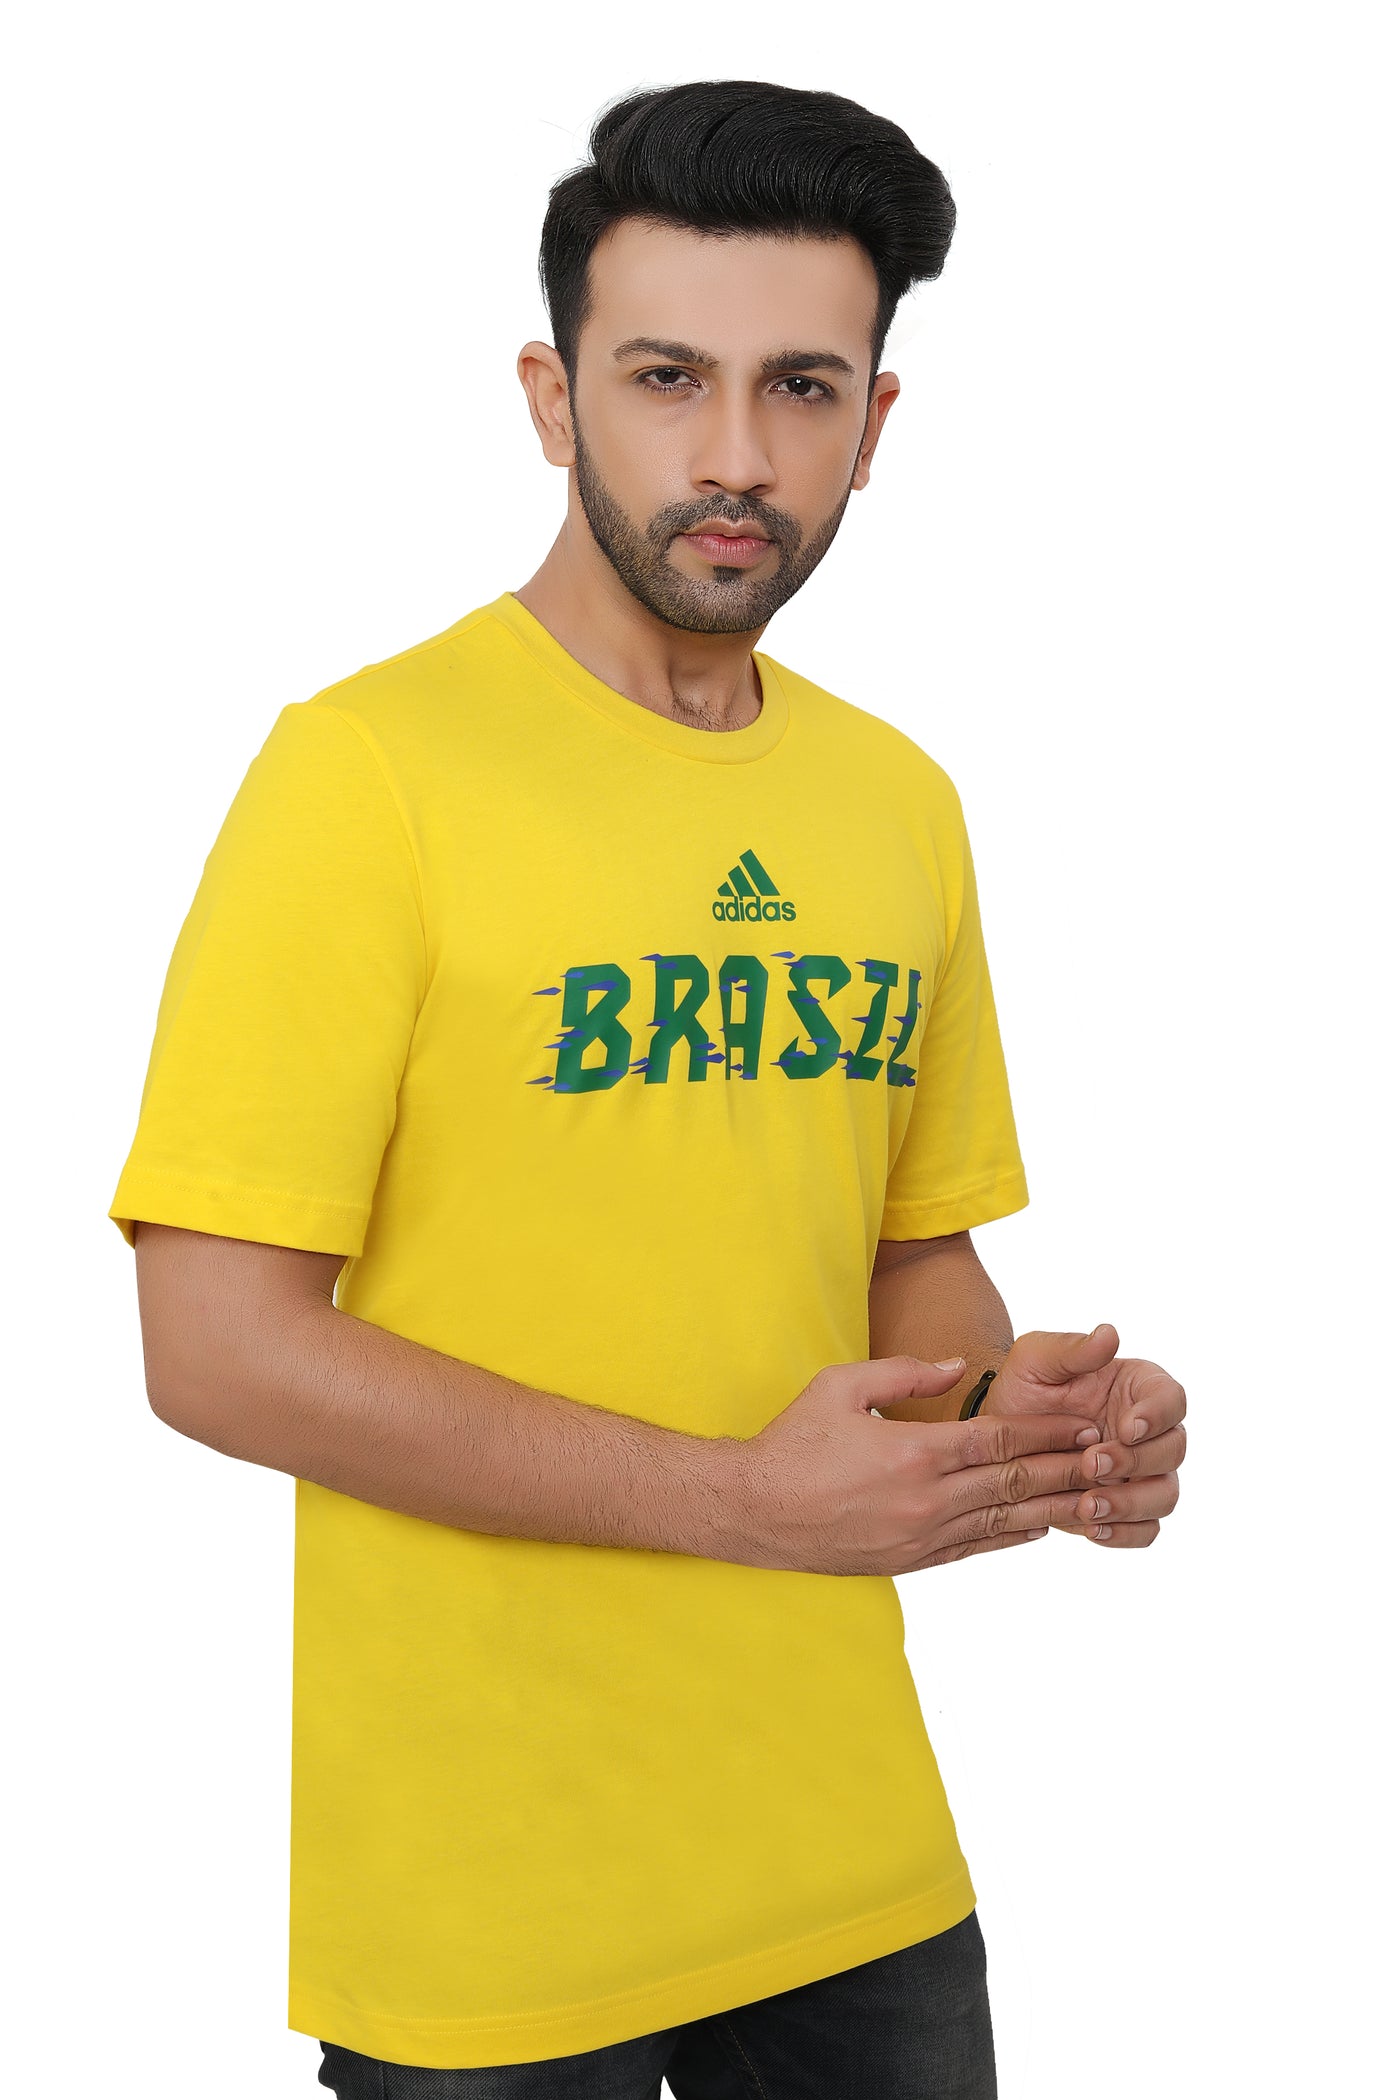 ADIDAS BRAZIL FIFA WORLD CUP 2022 - JERSEY